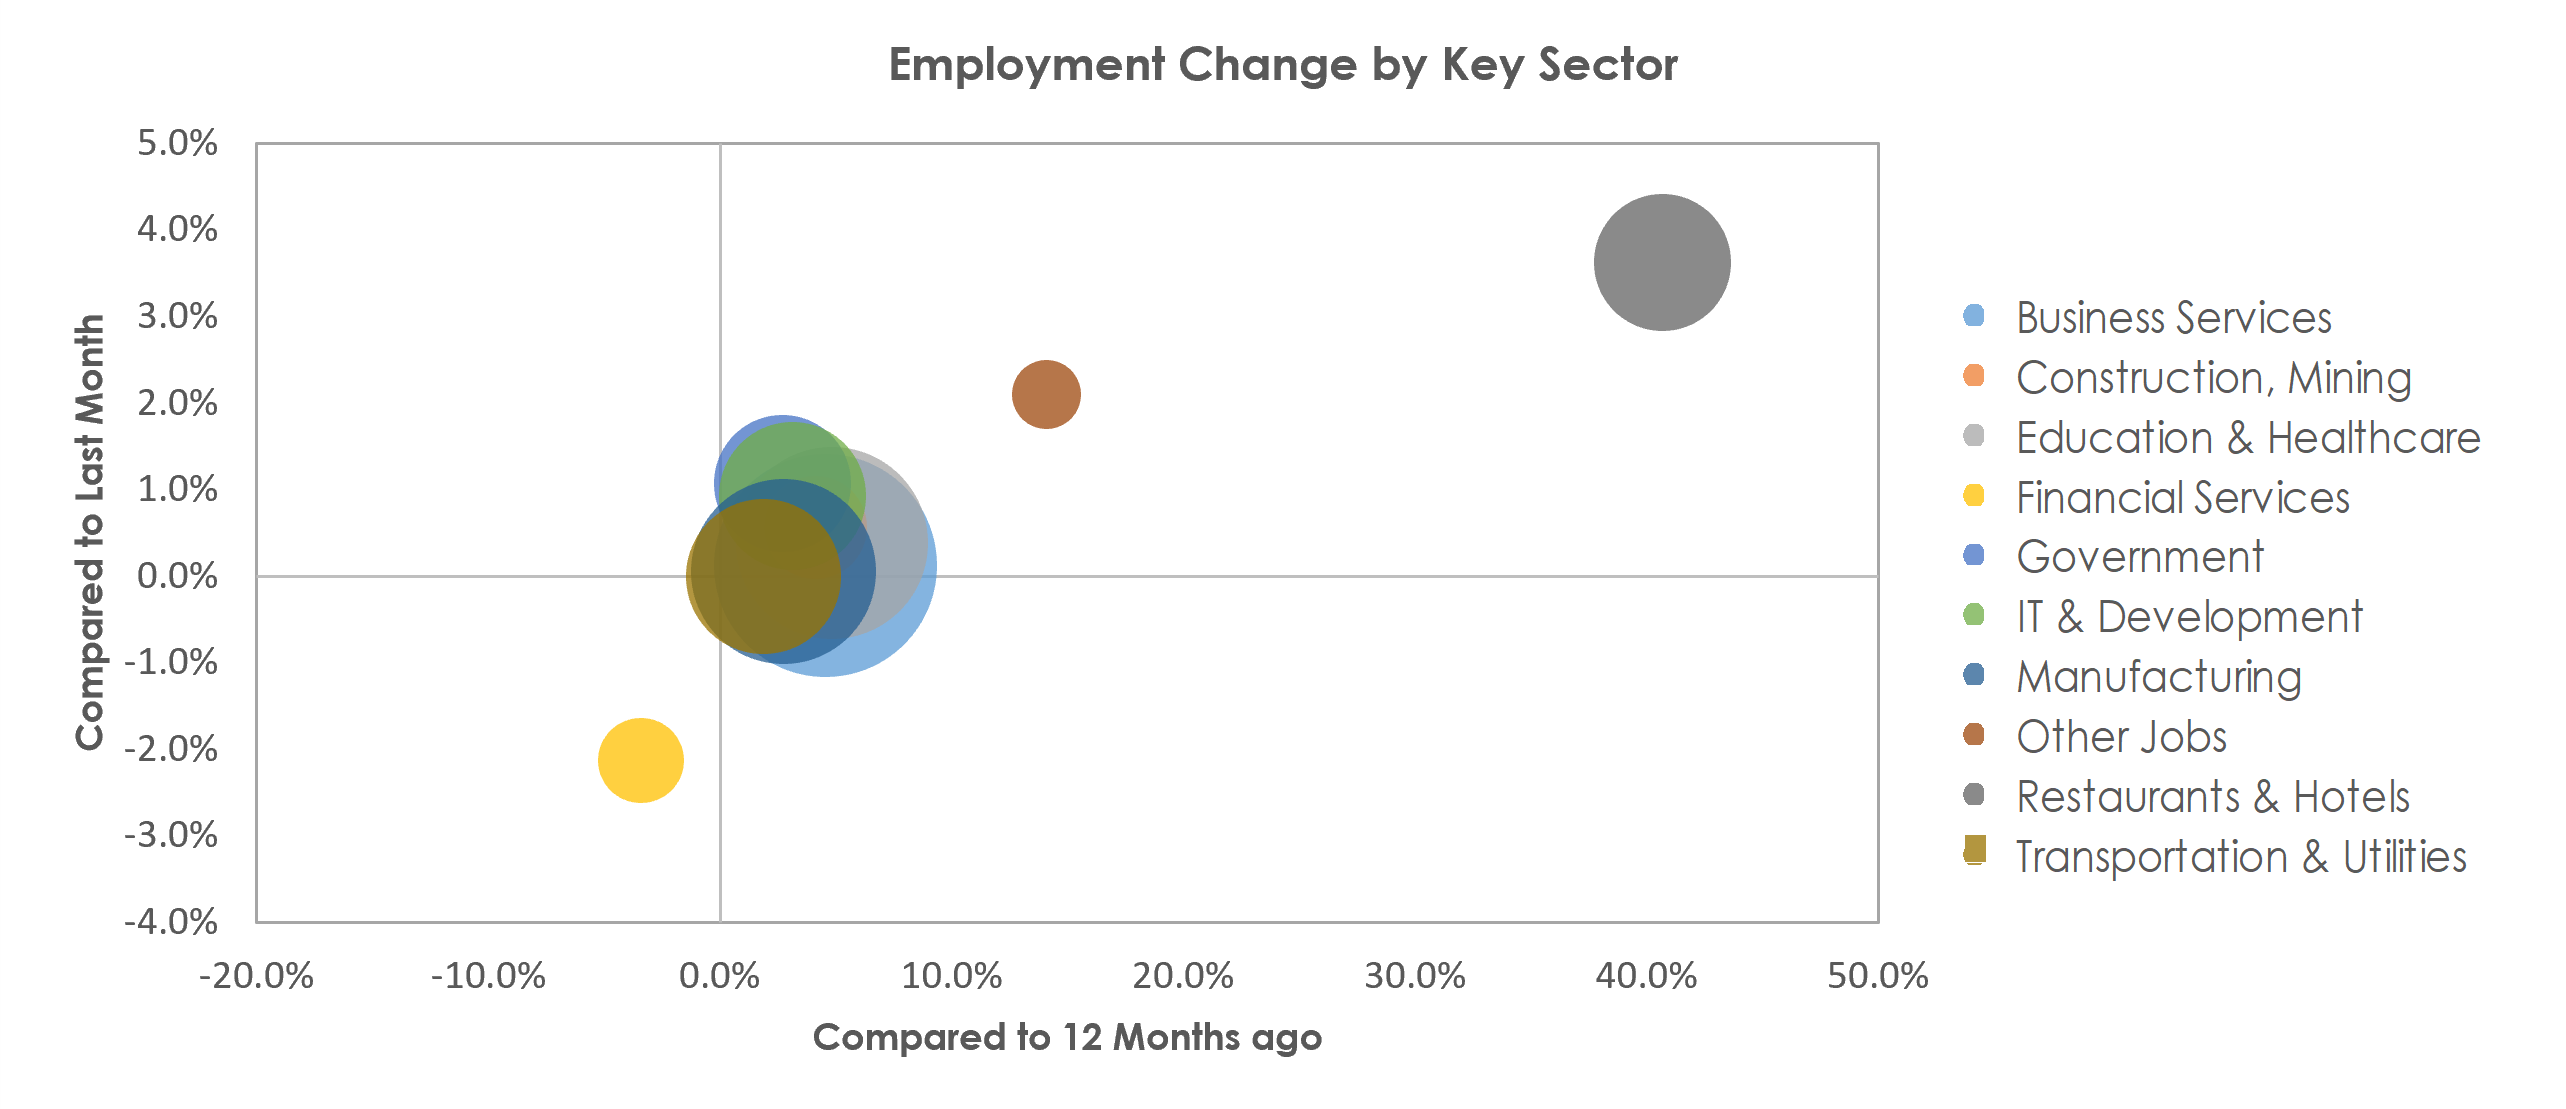 San Jose-Sunnyvale-Santa Clara, CA Unemployment by Industry March 2022